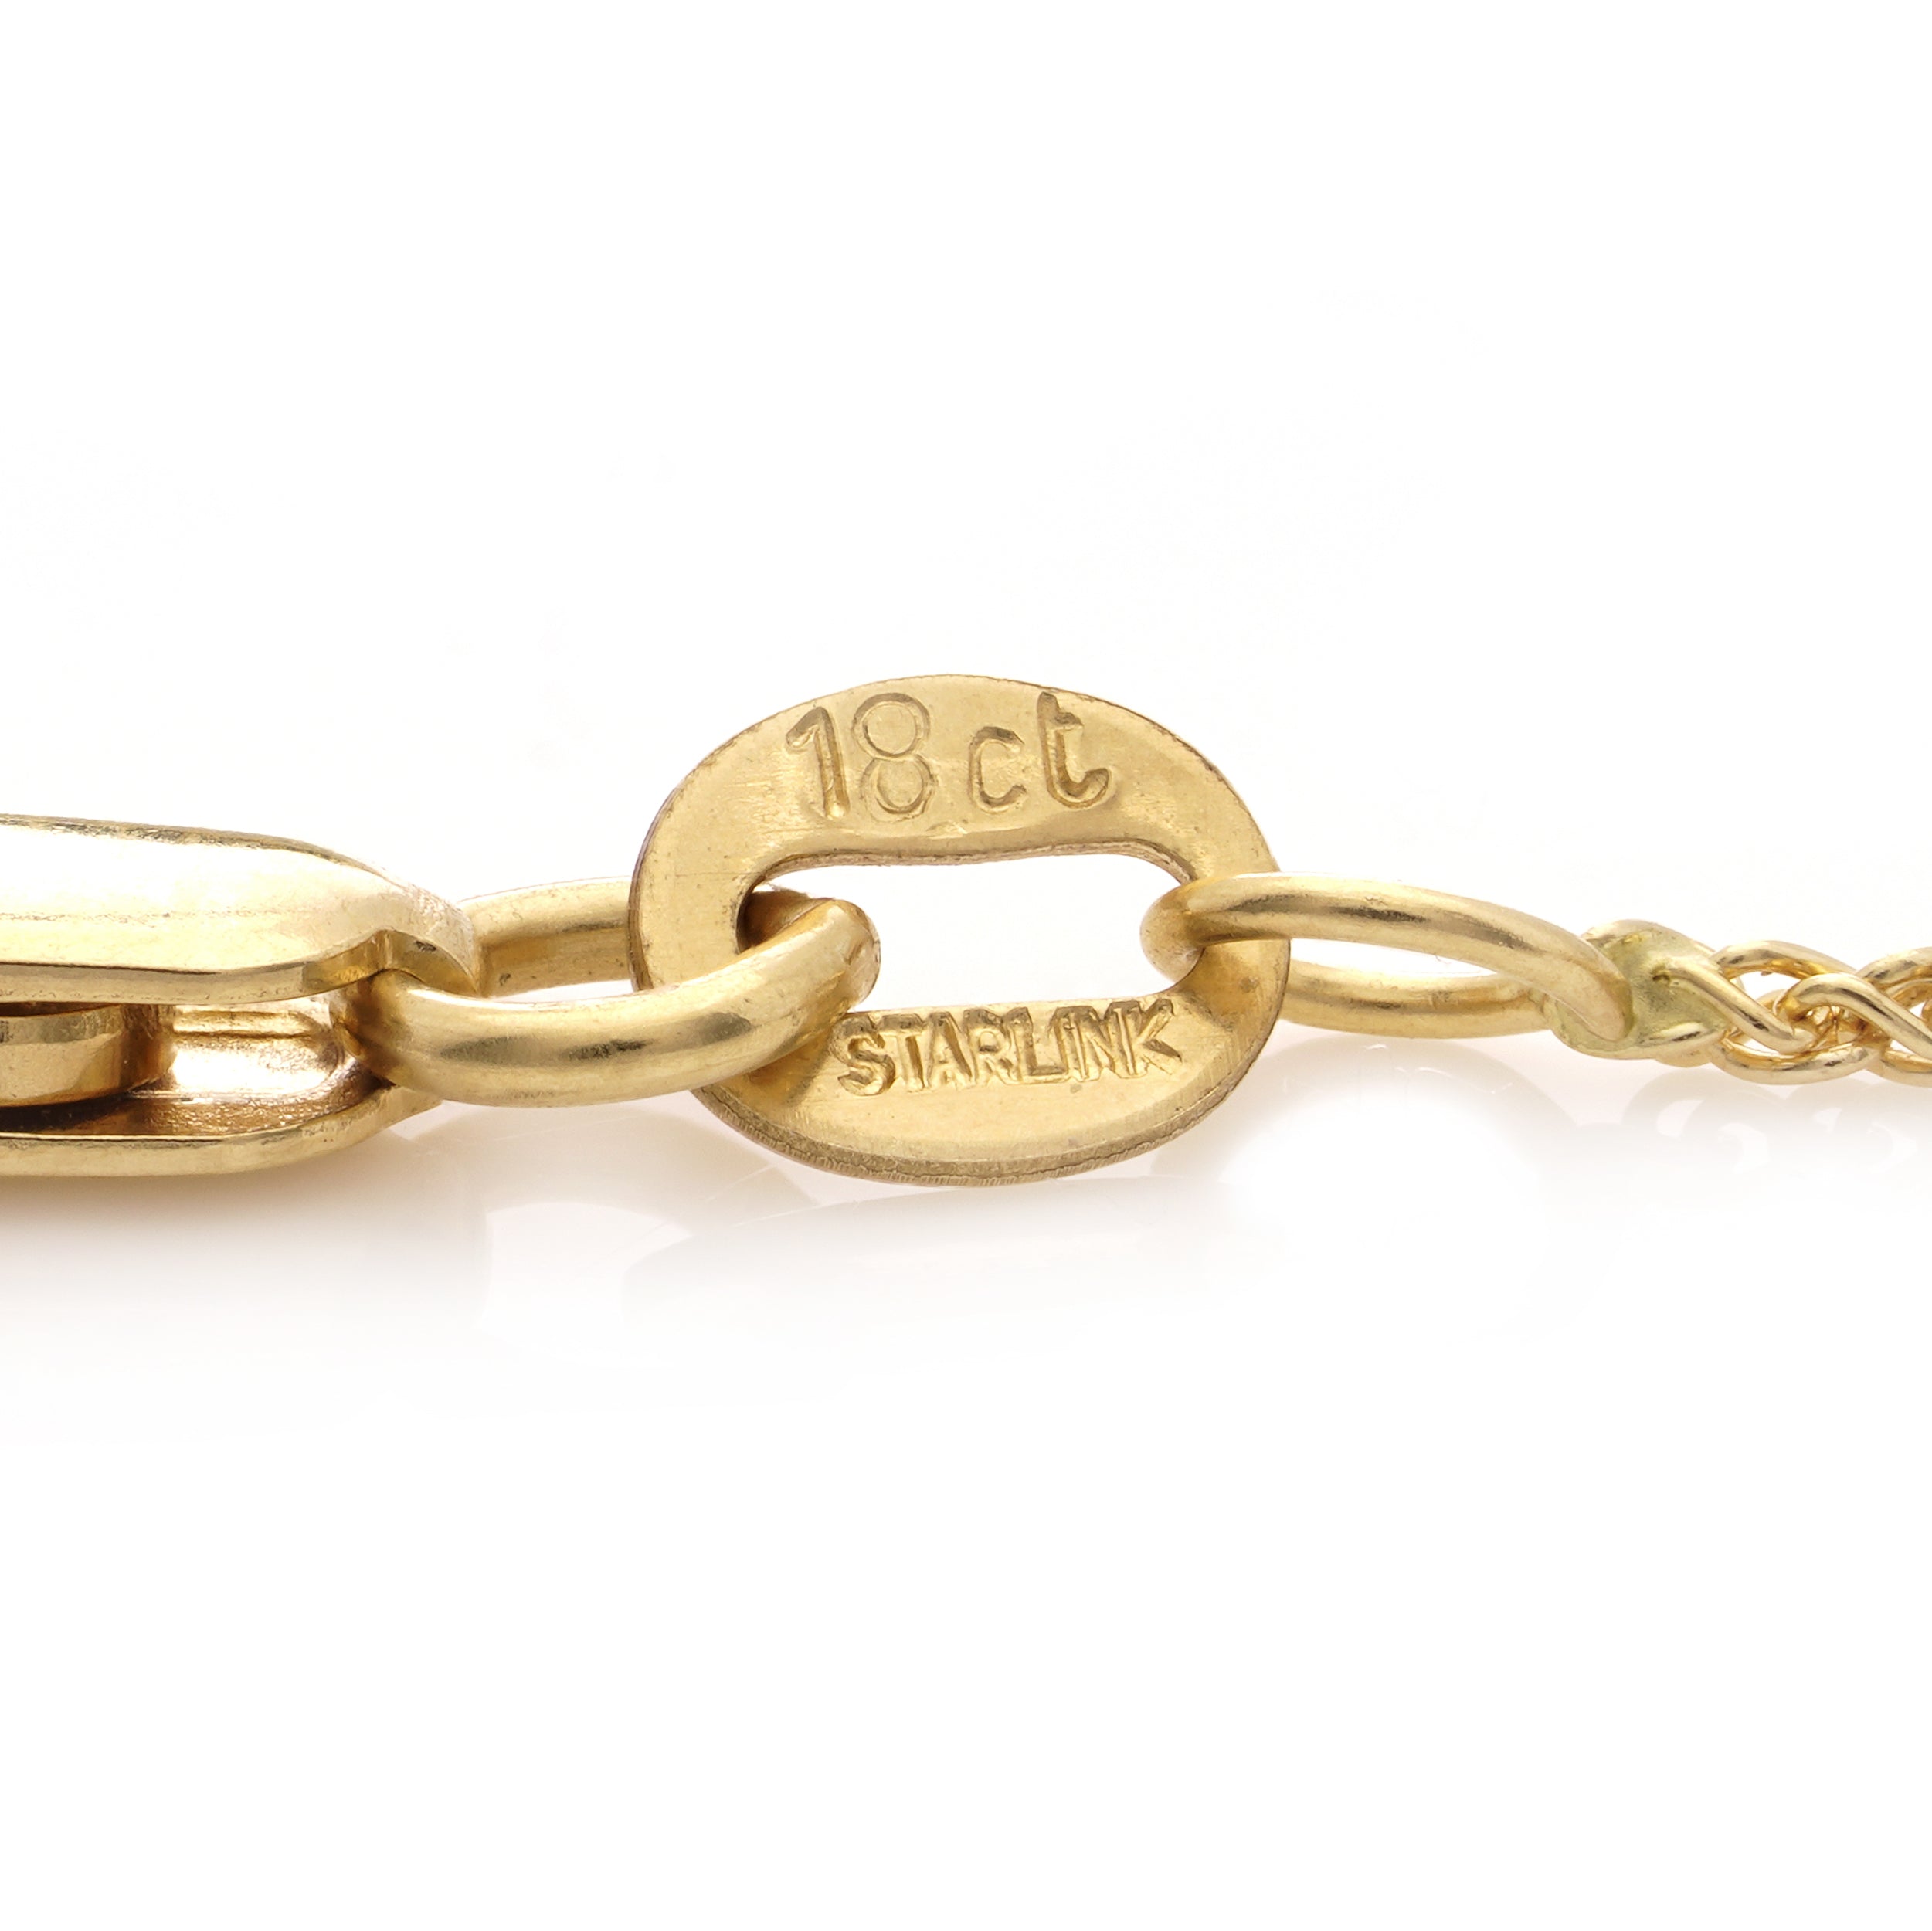 Jade & Gold Moneybag Pendant - Wildsmith Jewellery